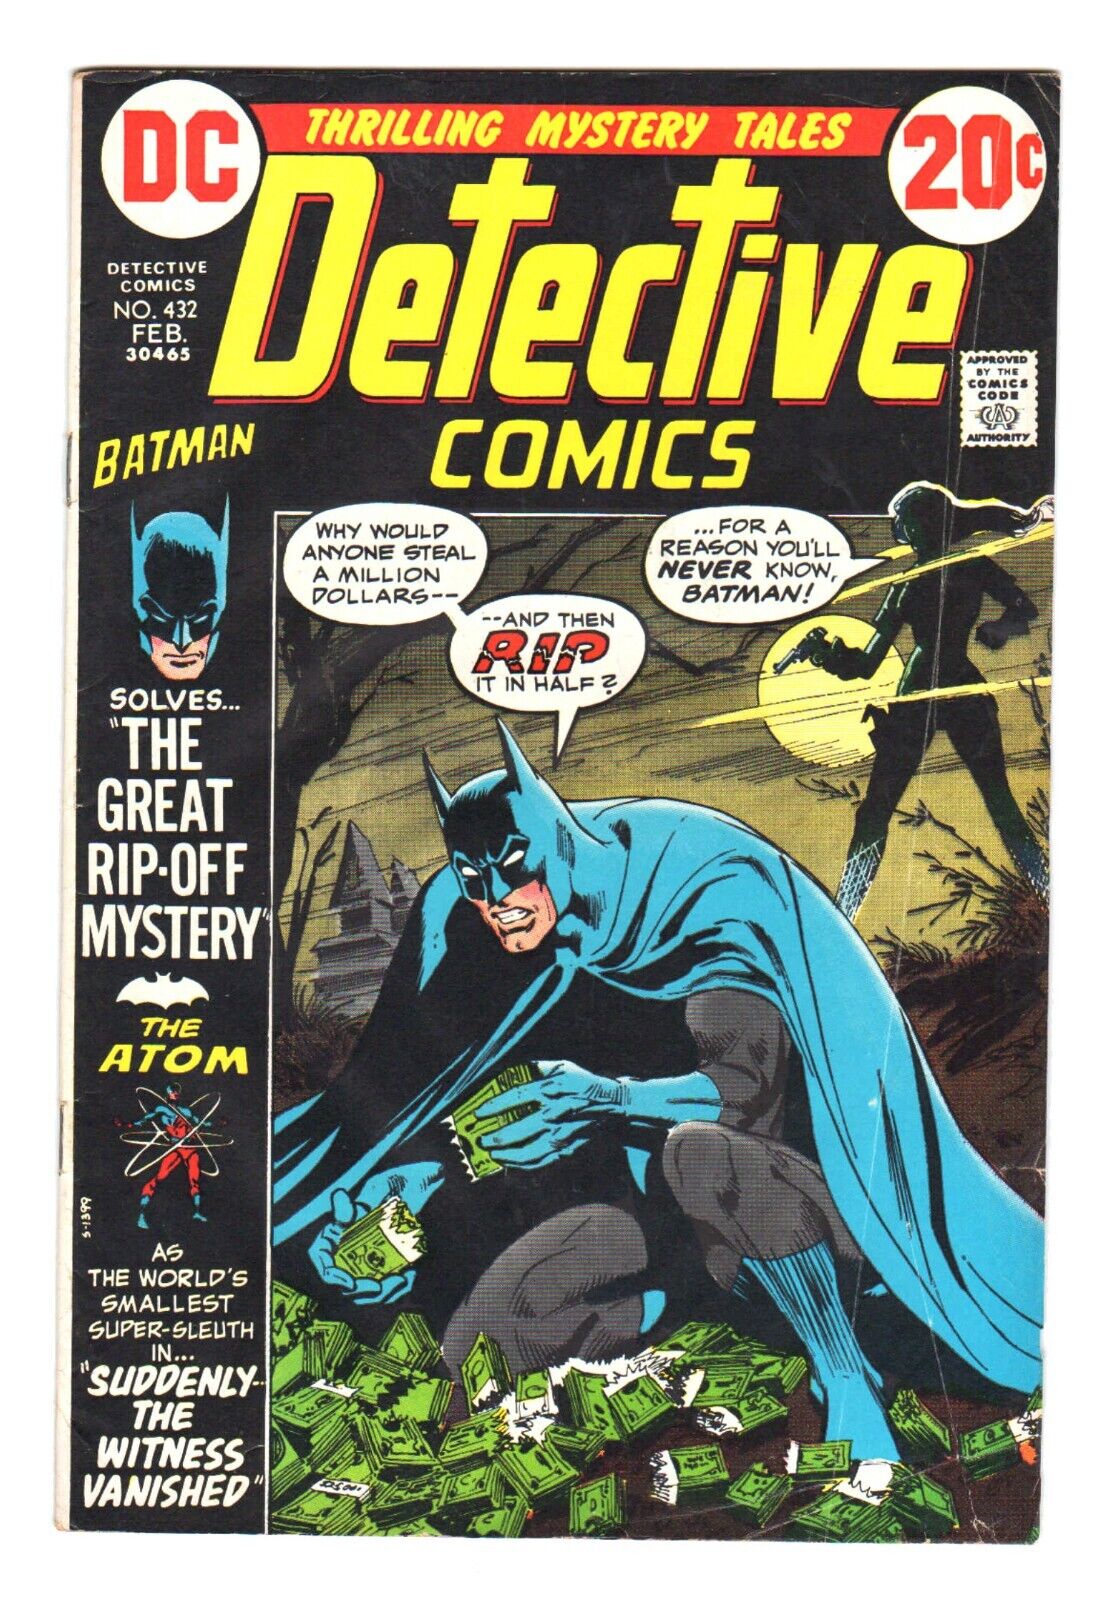 Comic: Detective Comics #432 - Feb 1973